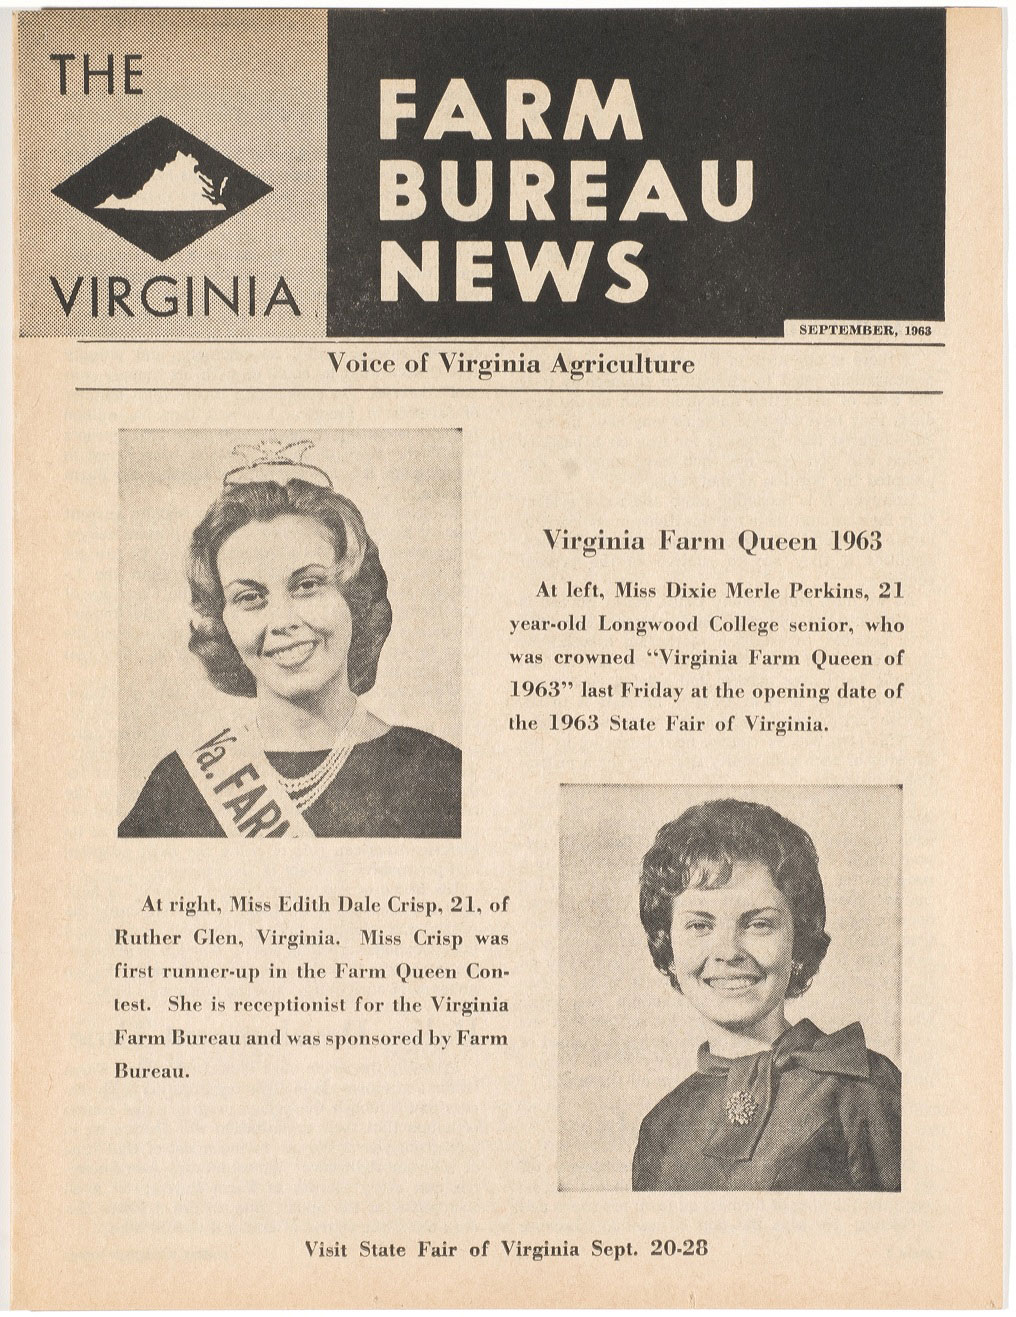 Virginia Farm Bureau News Goes Digital